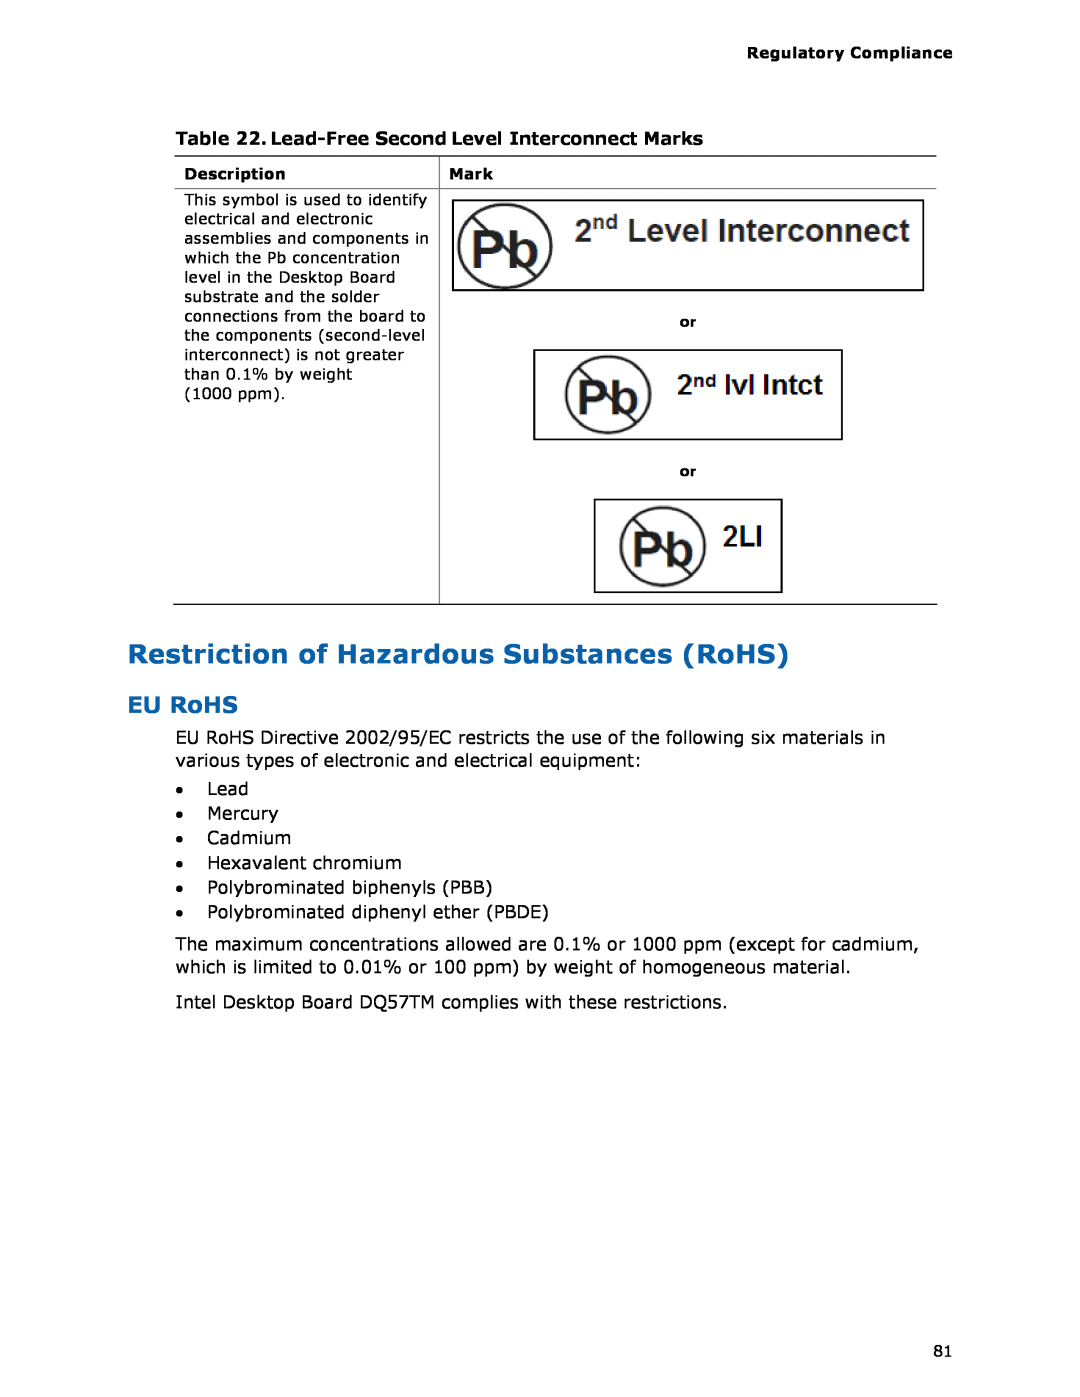 Intel DQ57TM manual Restriction of Hazardous Substances RoHS, EU RoHS 